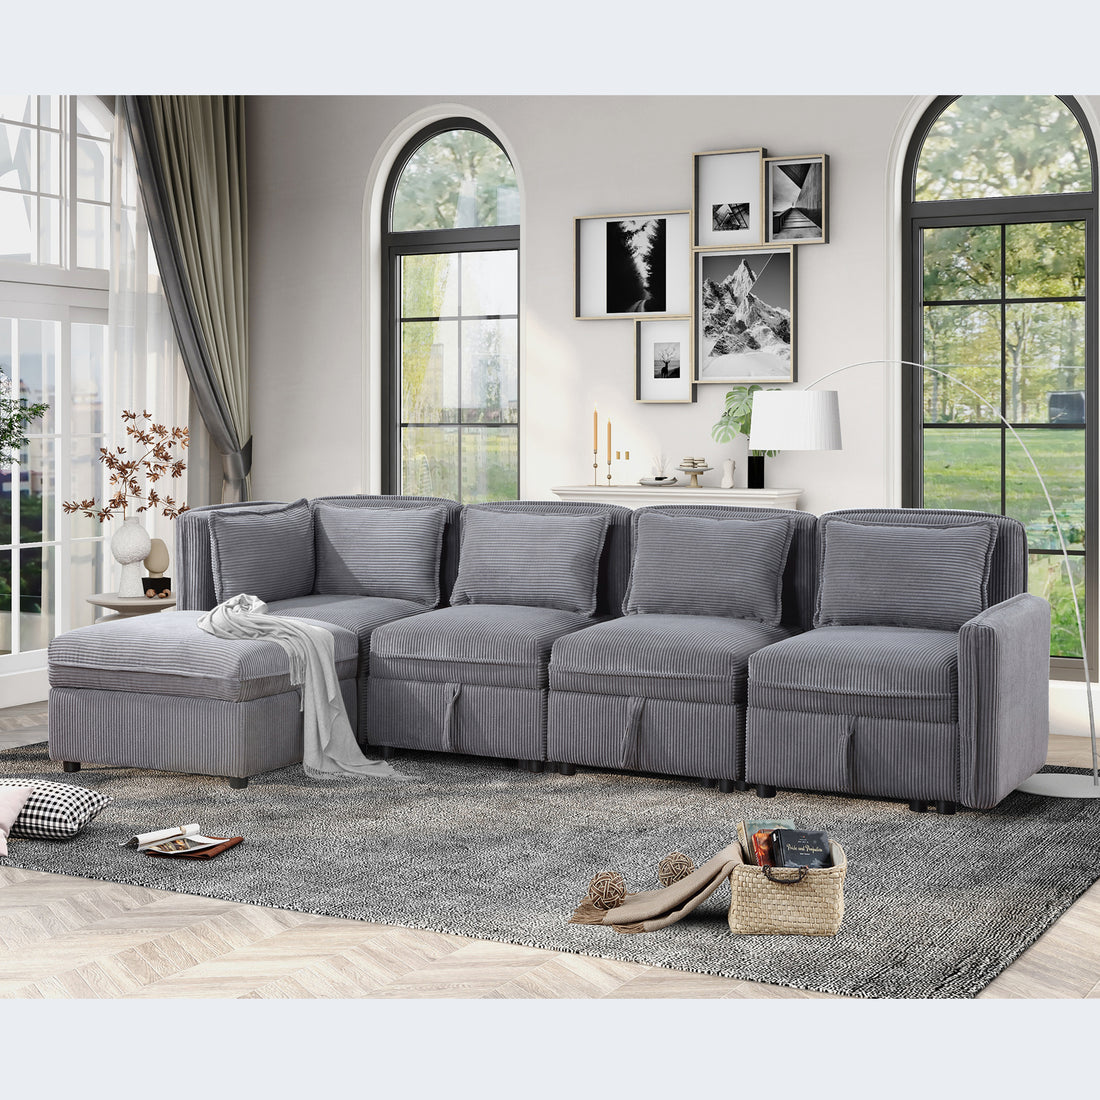 Modular Sofa set with storage dark gray-wood-corduroy-5 seat